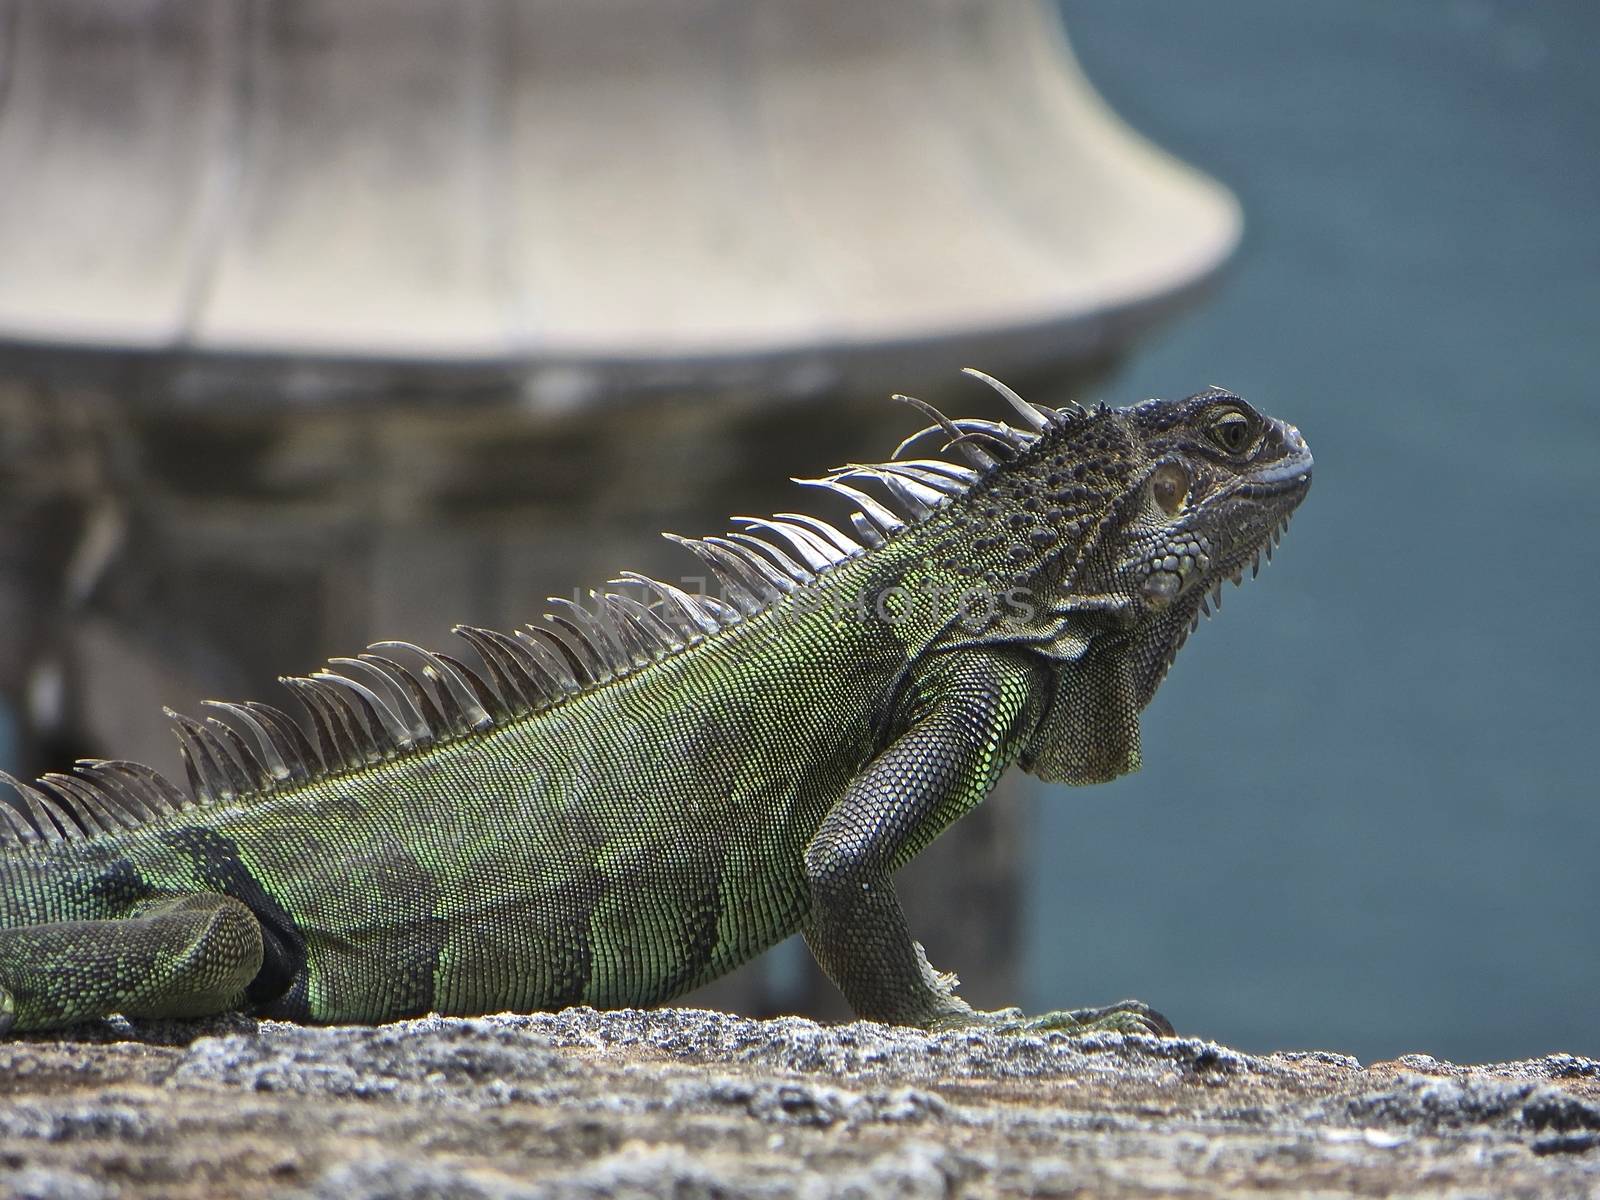 Iguana sitting on a wall at El Morro in San Juan, Puerto Rico.